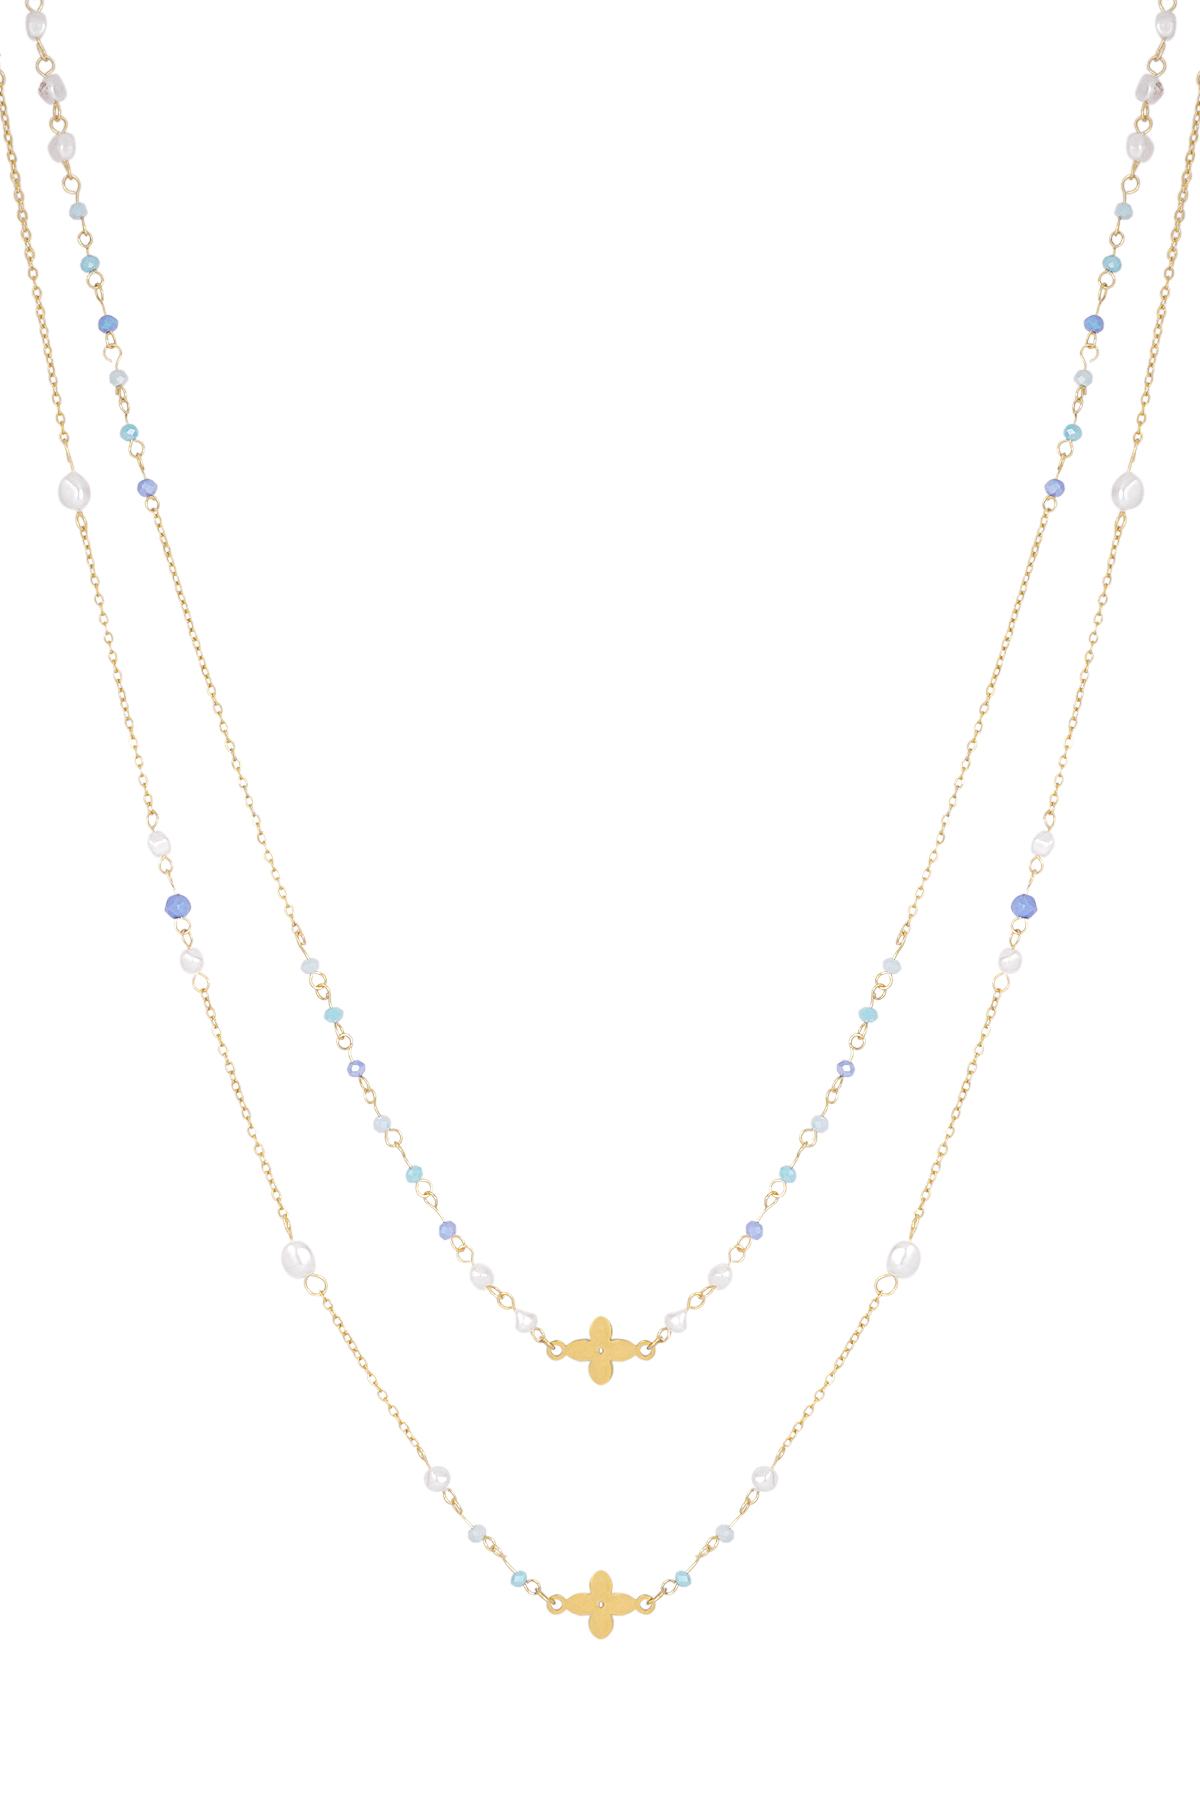 Double clover necklace - blue/gold  h5 